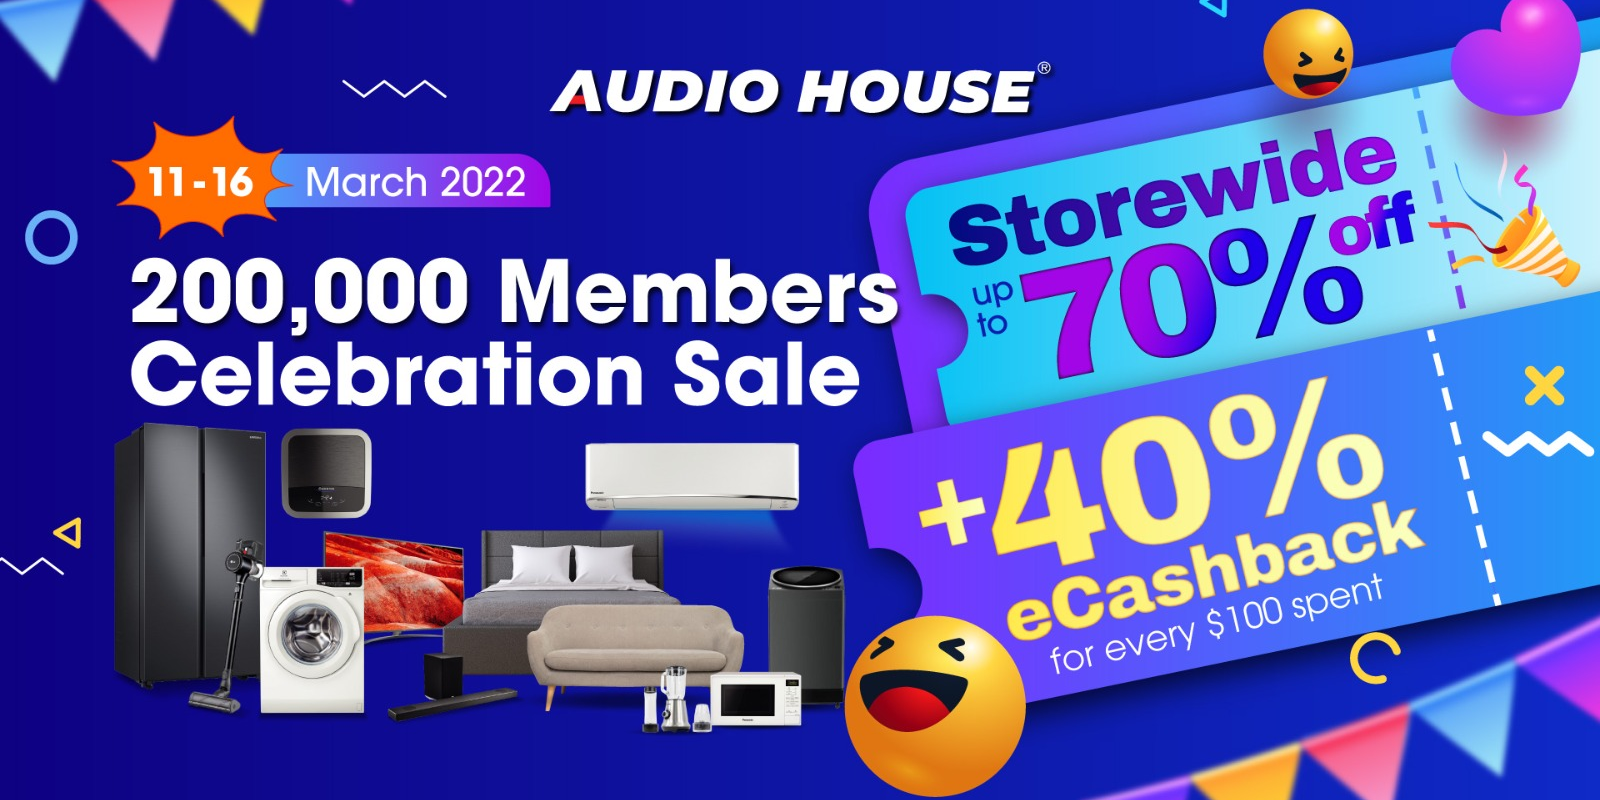 [Audio House 200,000 Members Celebration Sale] Enjoy Up to 70% Storewide + 40% eCashback with Every